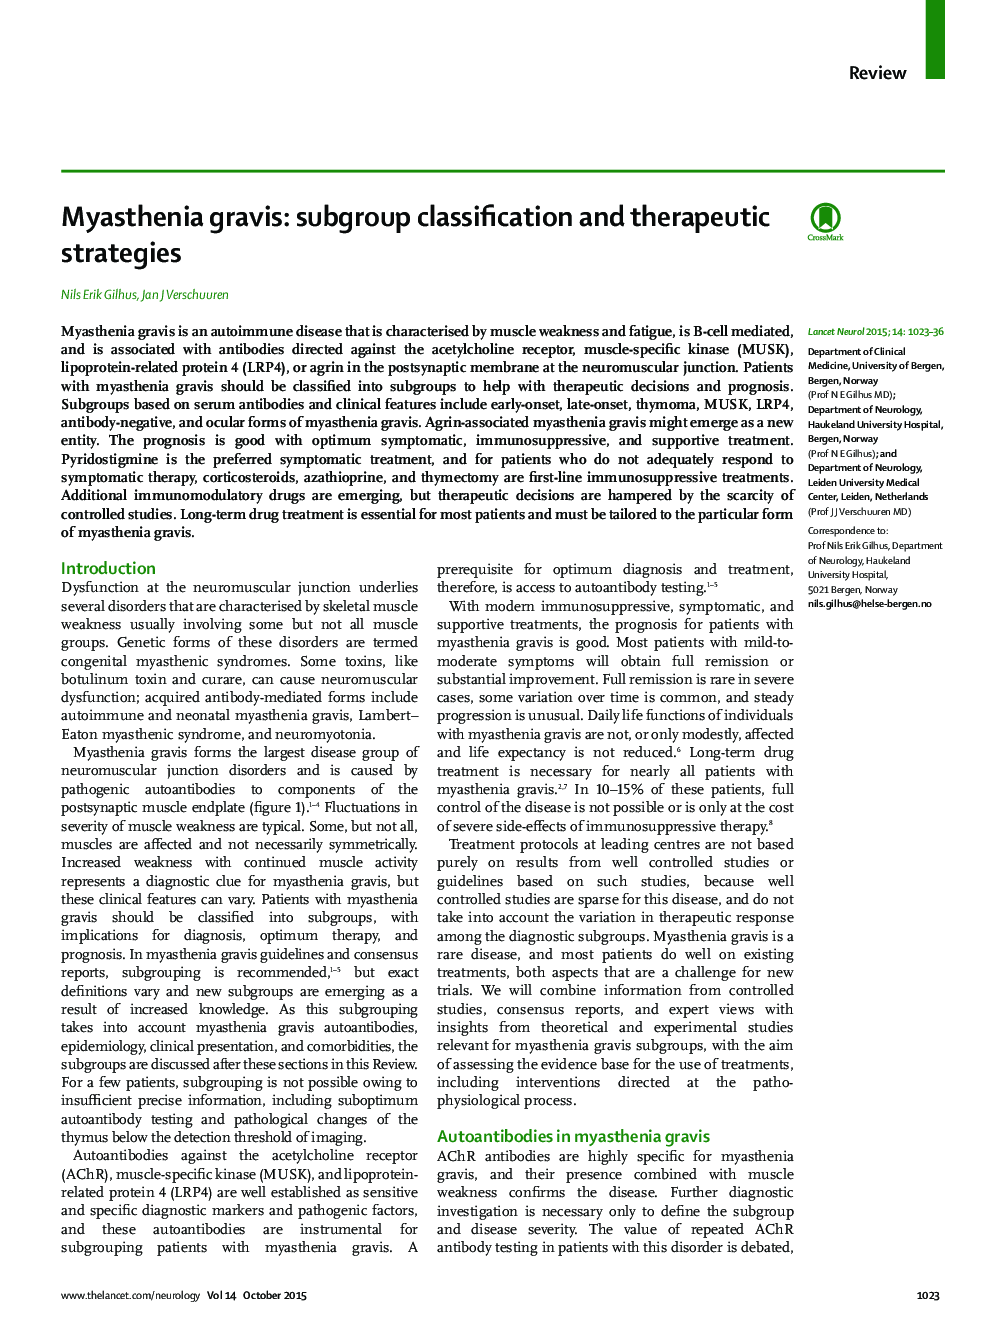 Myasthenia gravis: subgroup classification and therapeutic strategies